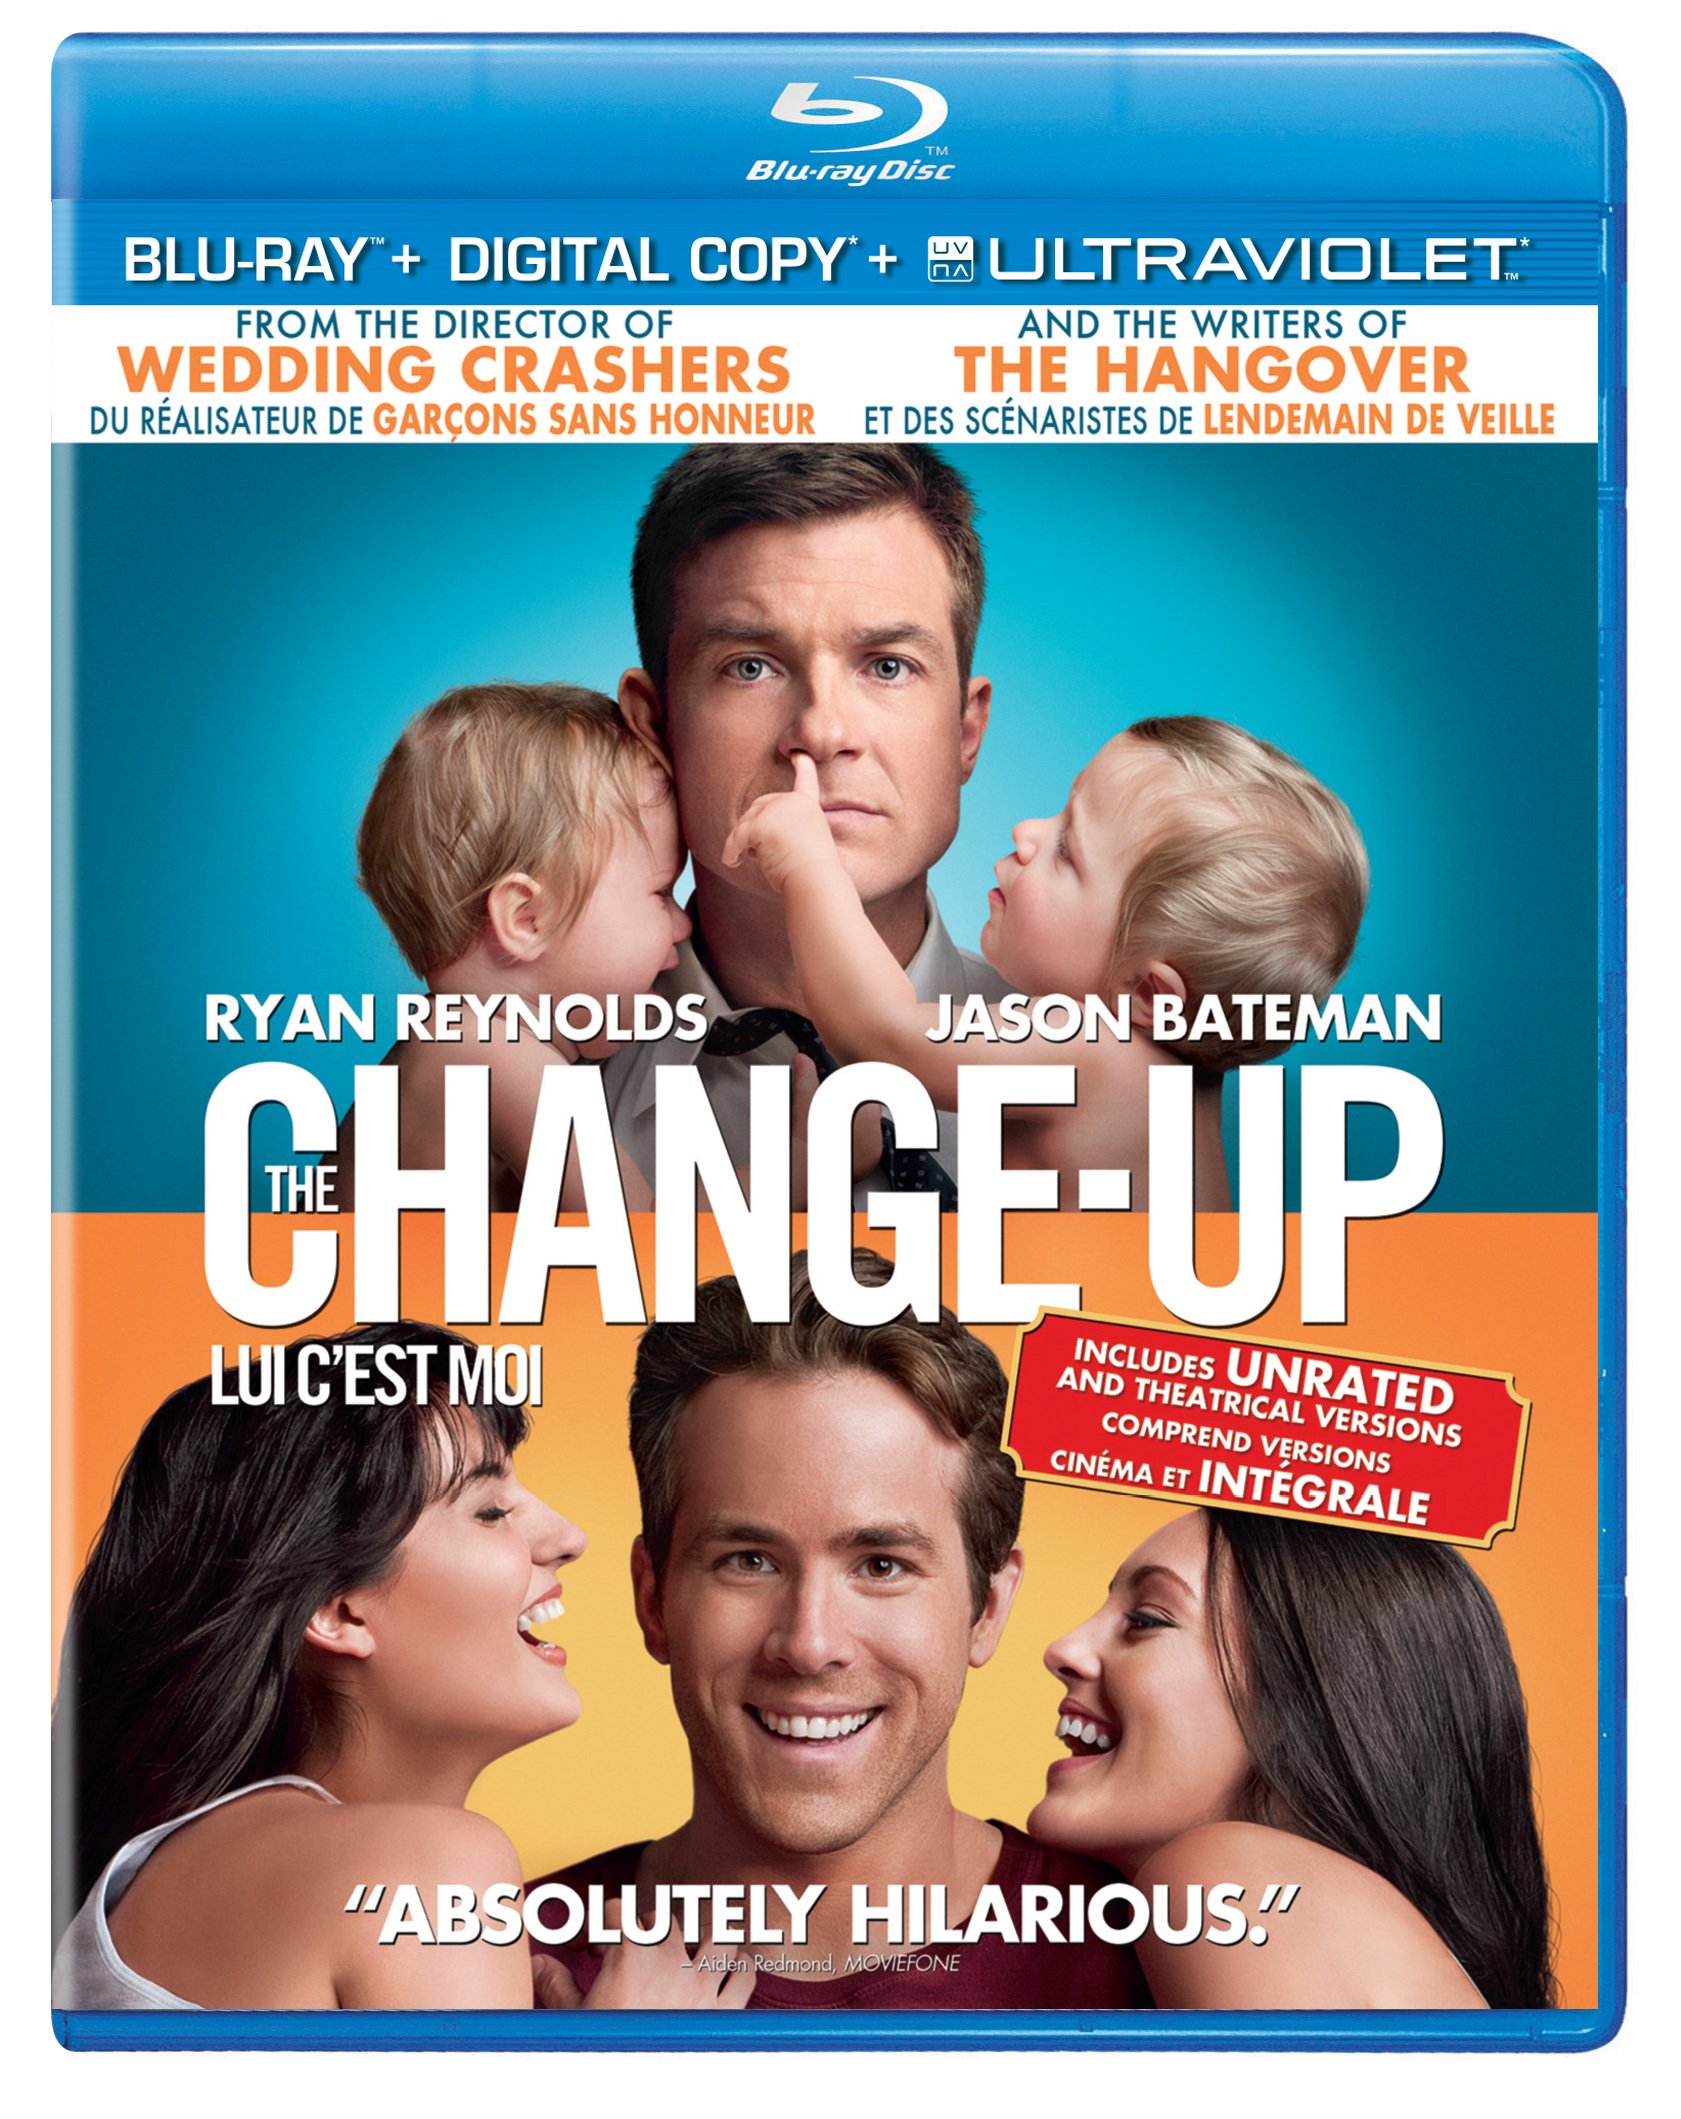 The Change Up (Blu-ray + Digital Copy + UltraViolet) on MovieShack